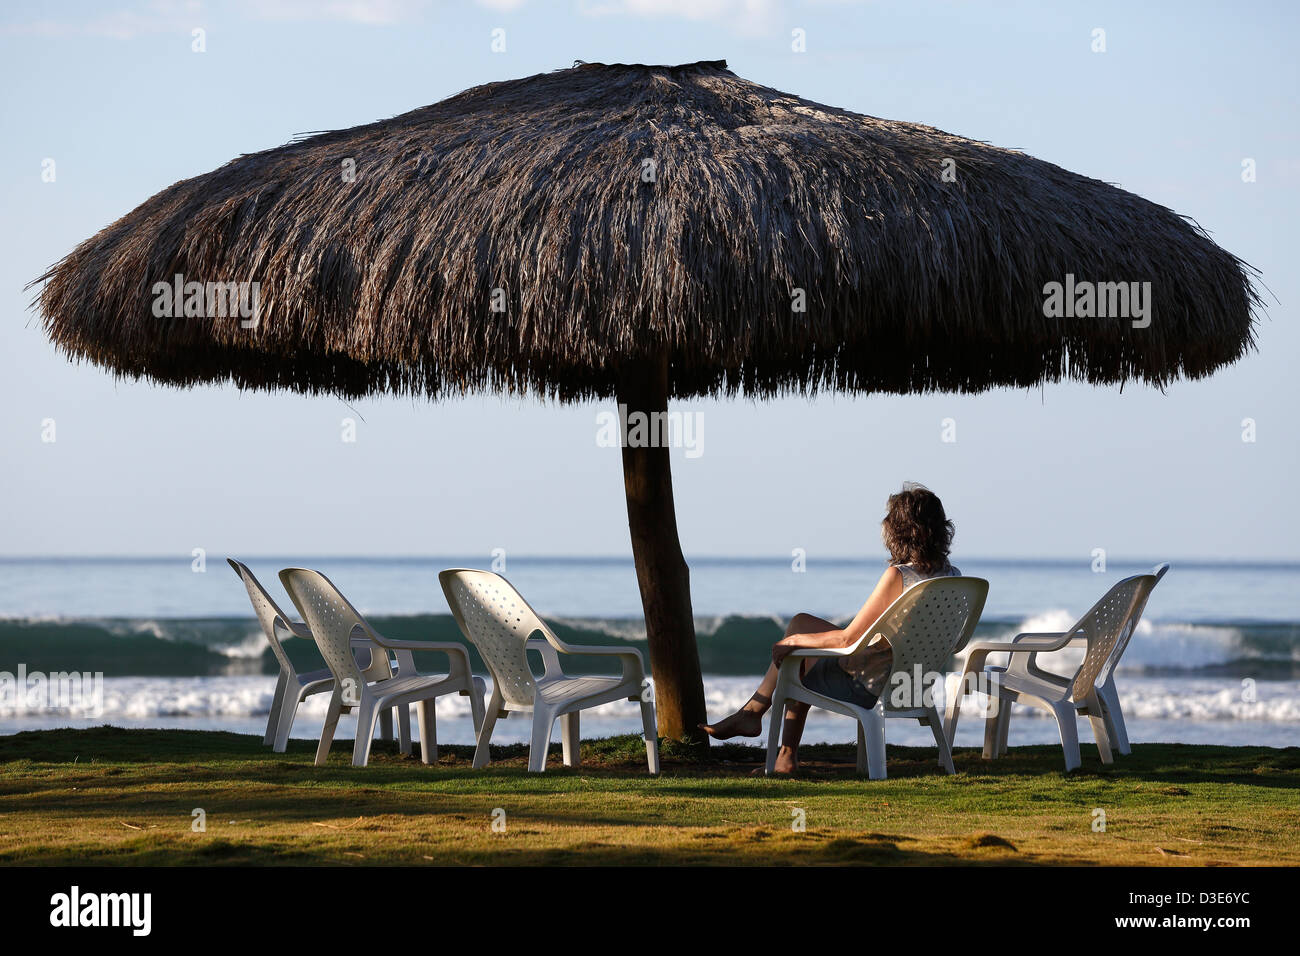 Woman sitting under a large thatched umbrella, Las Lajas, Panama Stock Photo